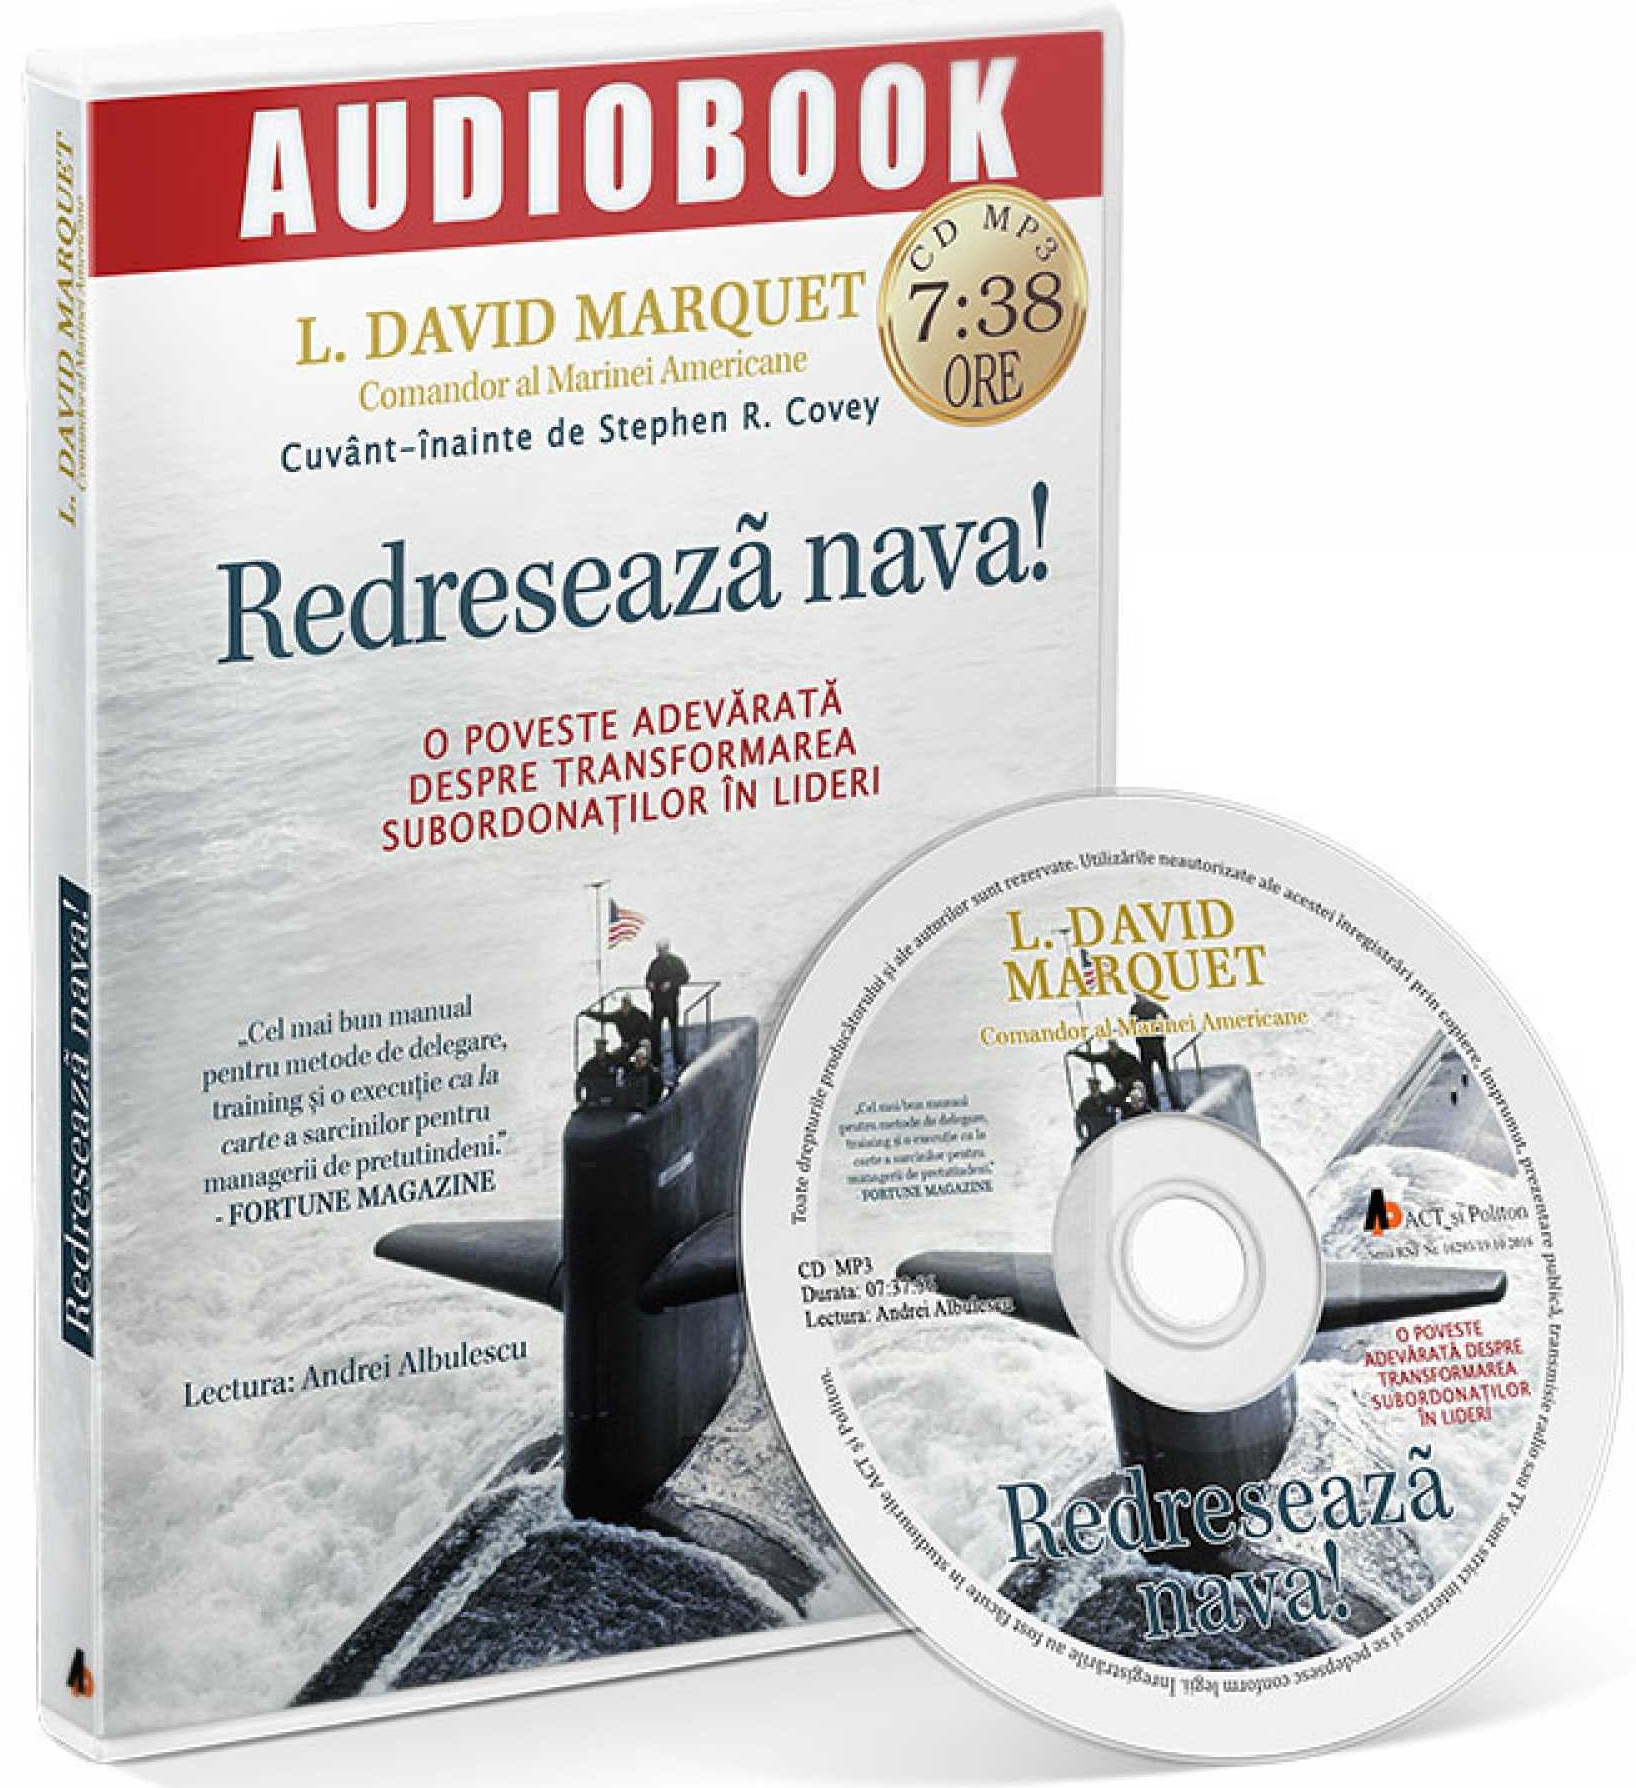 Redreseaza nava! | L. David Marquet carturesti.ro poza bestsellers.ro